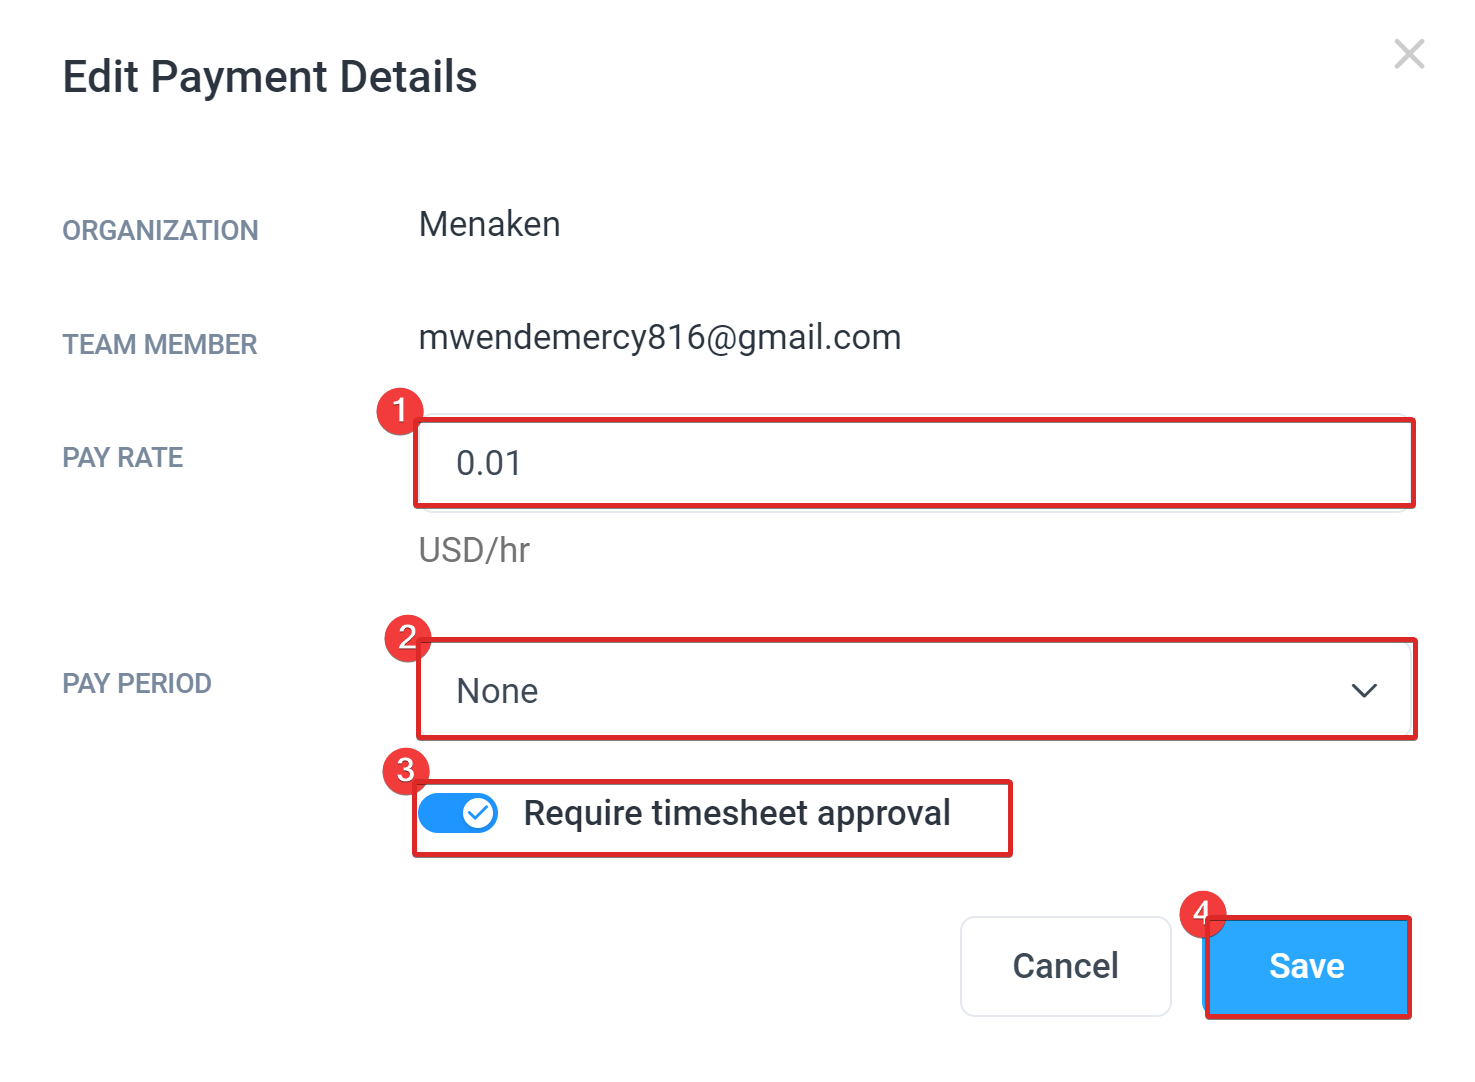 edit payment details invite page